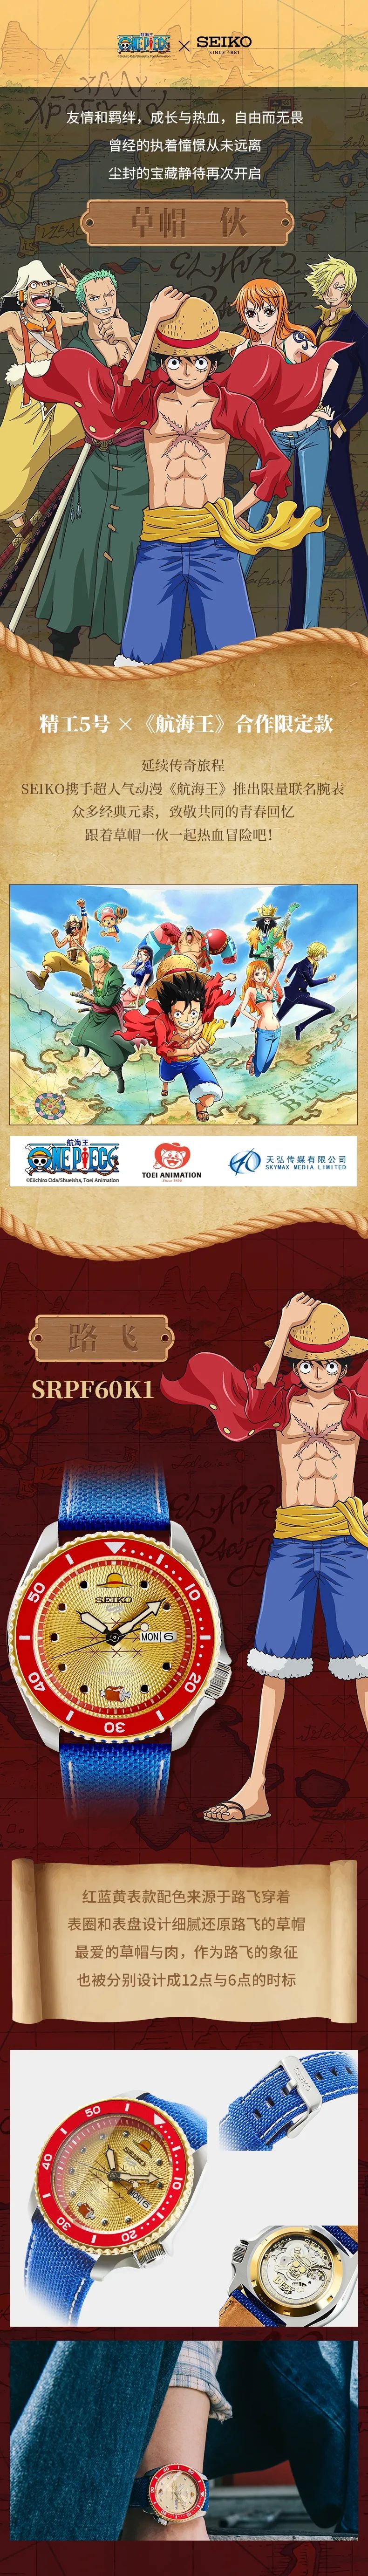 Seiko 5 Sports One Piece 一起冒险吧 Seiko精工表天猫旗舰店